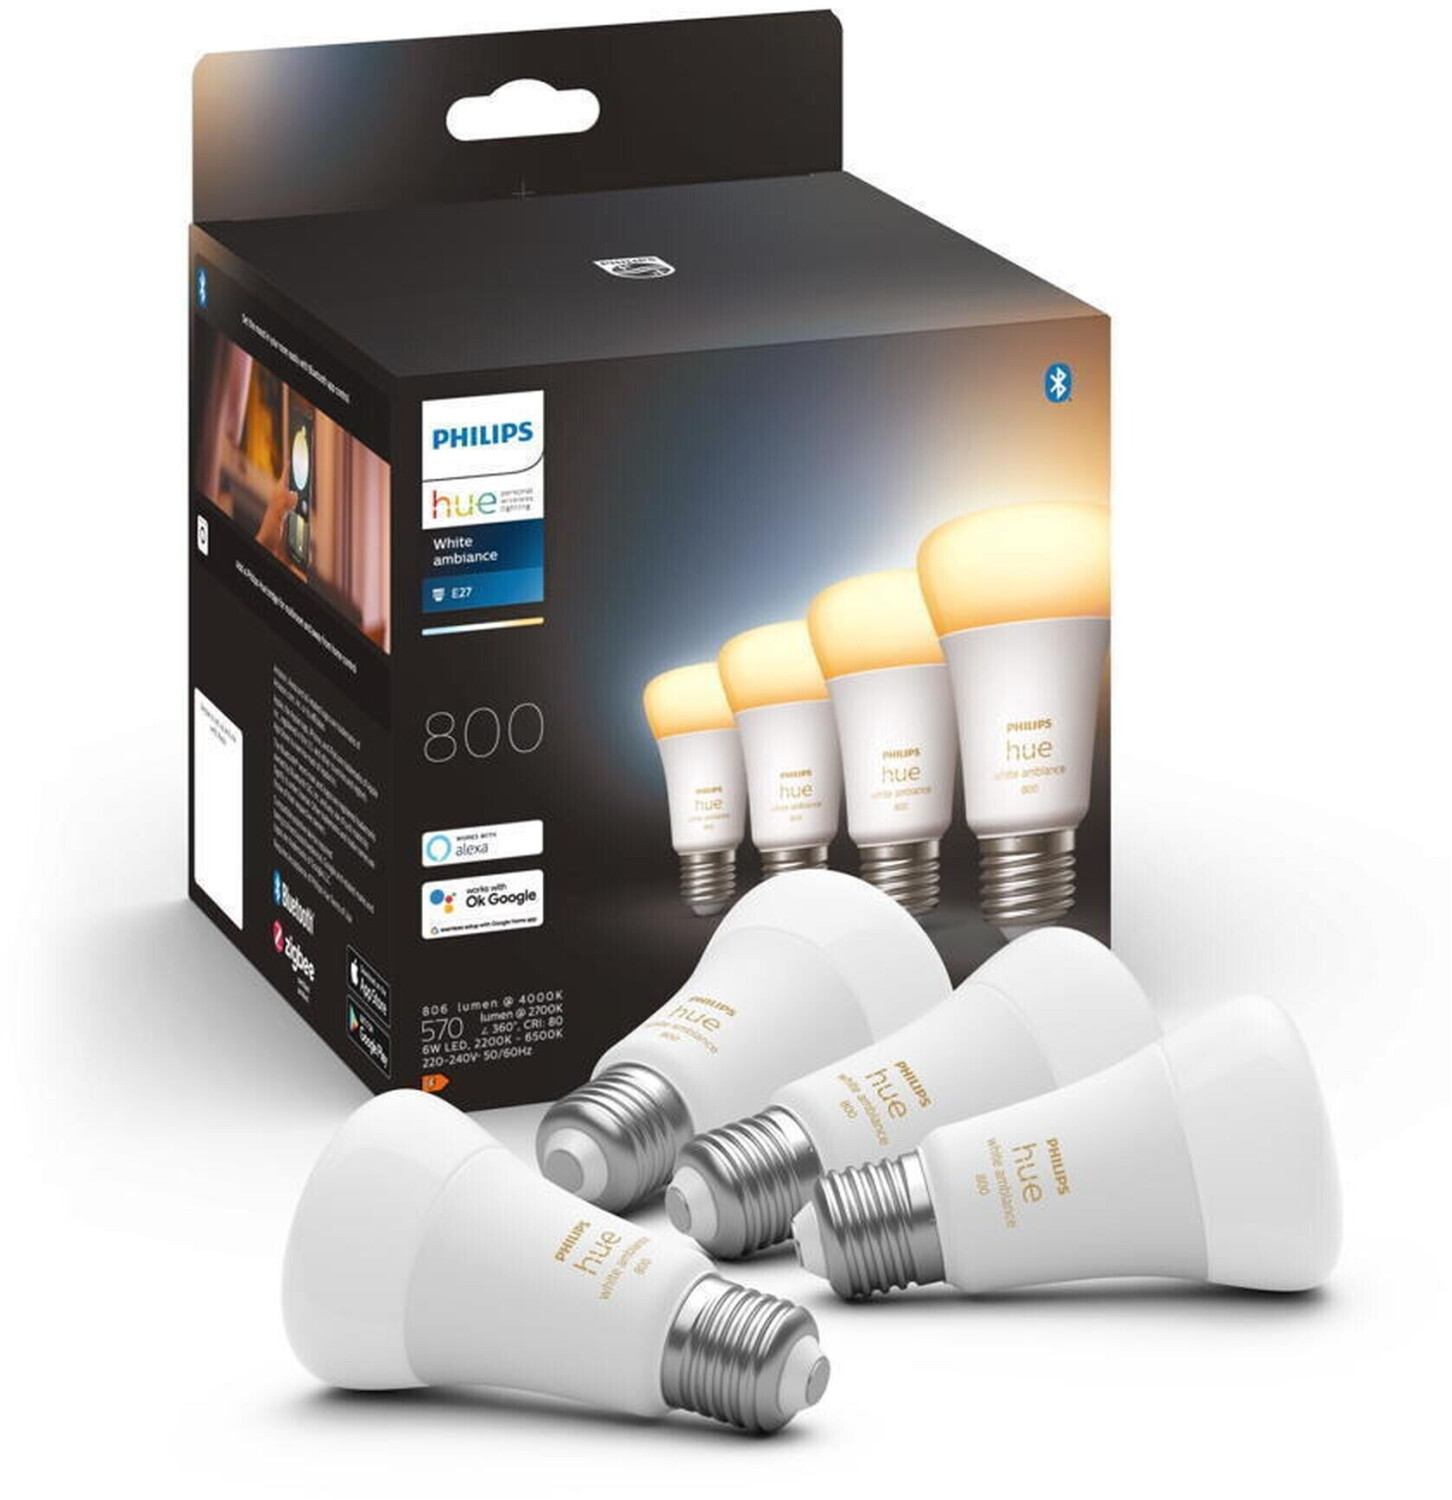 4x E14 LED Lampe Smart steuerbar via App & Sprache Alexa Google